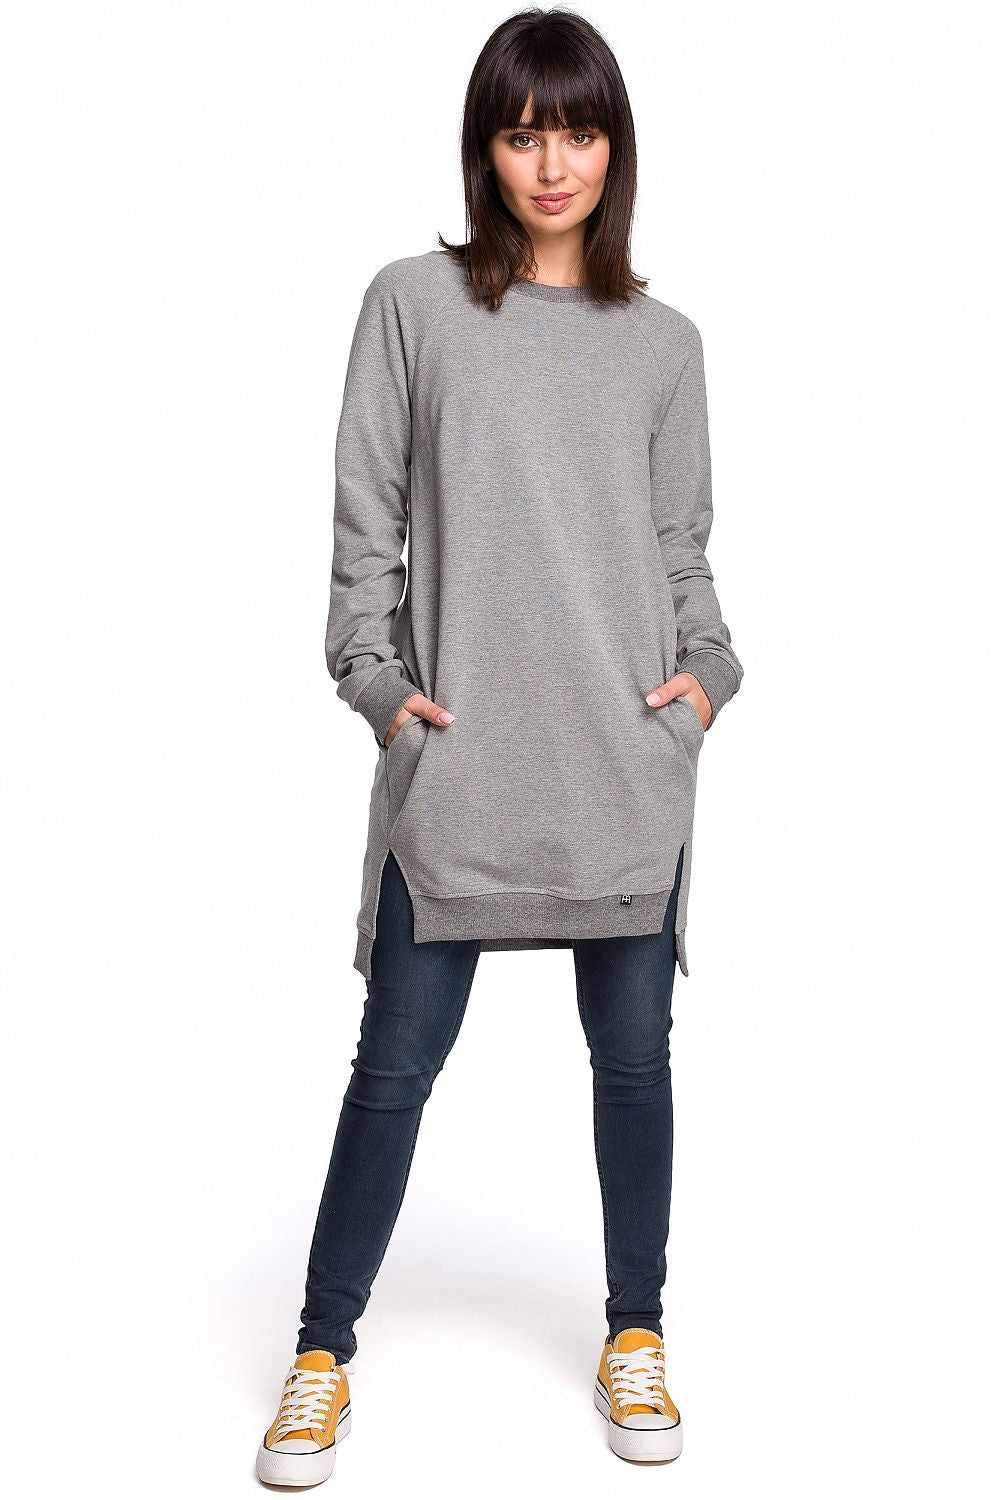 TEEK - Length Pocketed Sweatshirt TOPS TEEK M   